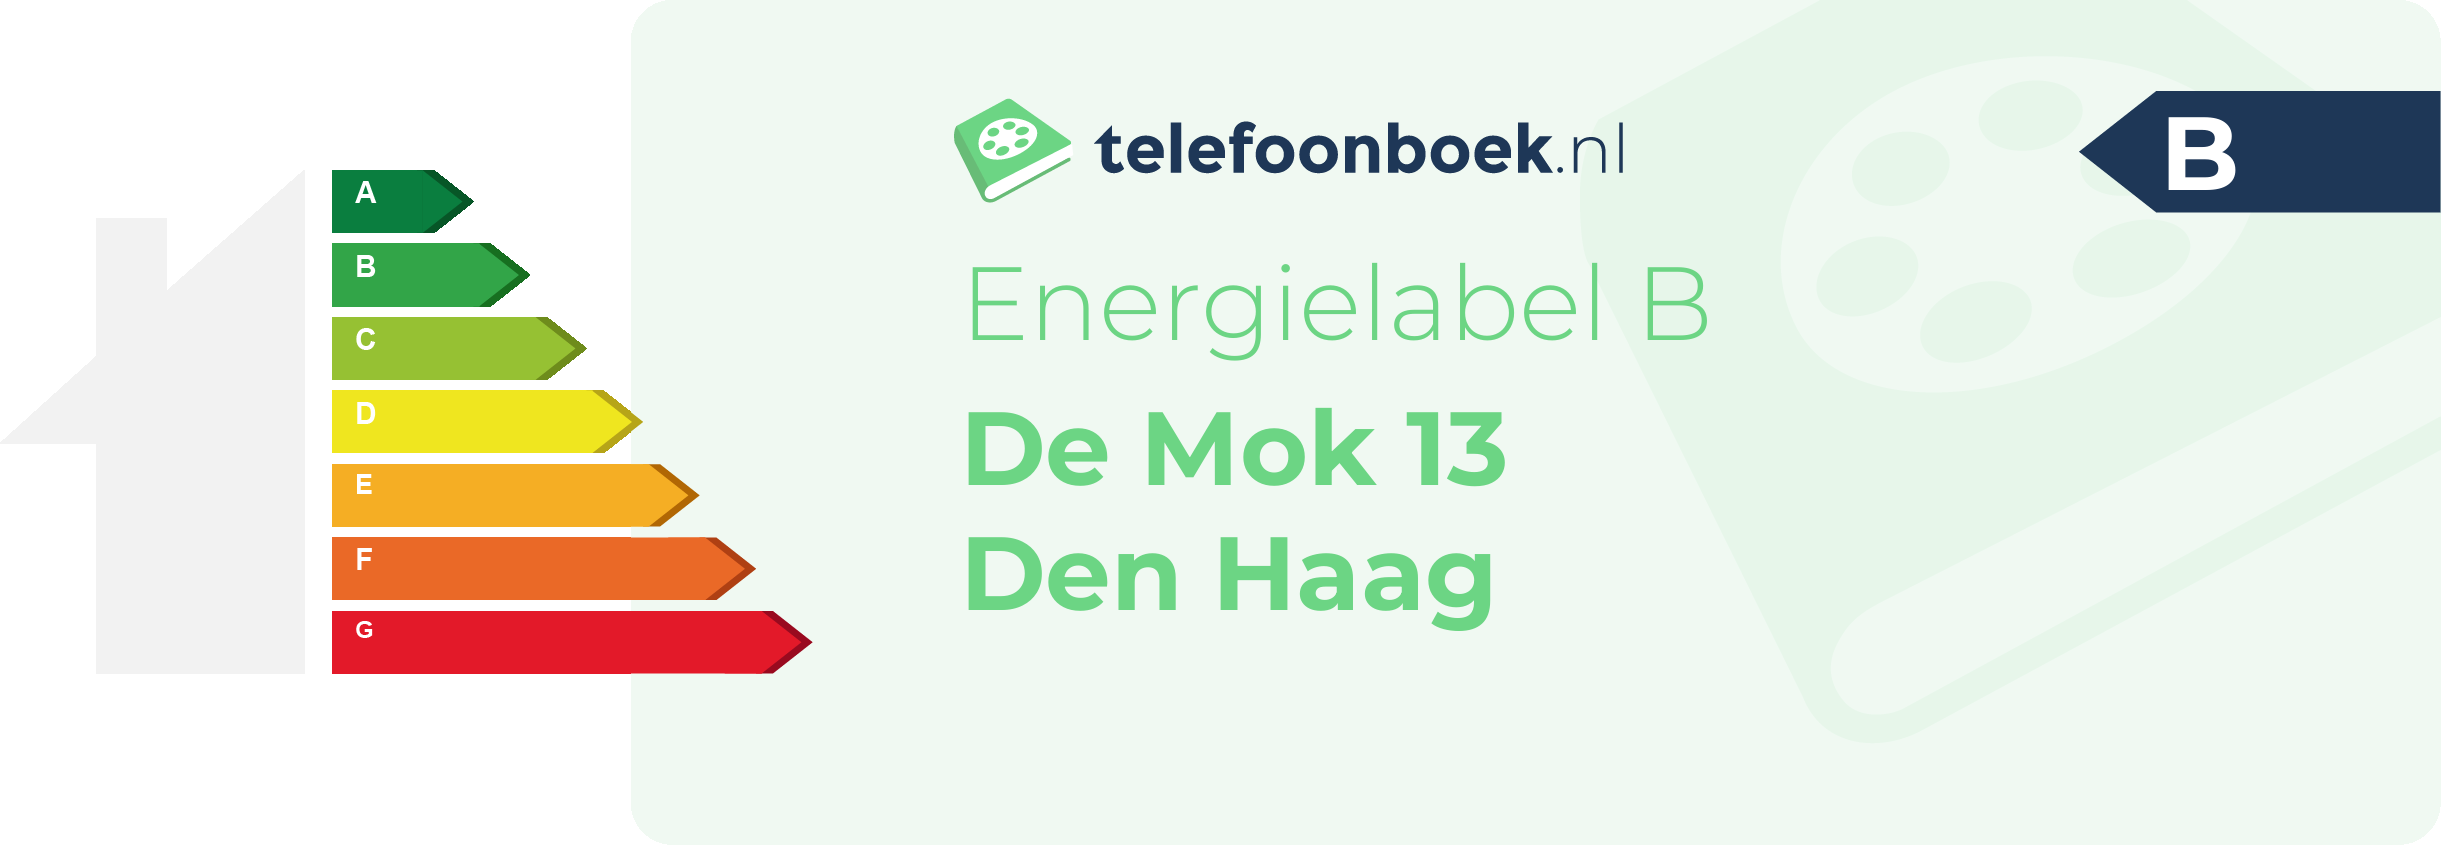 Energielabel De Mok 13 Den Haag